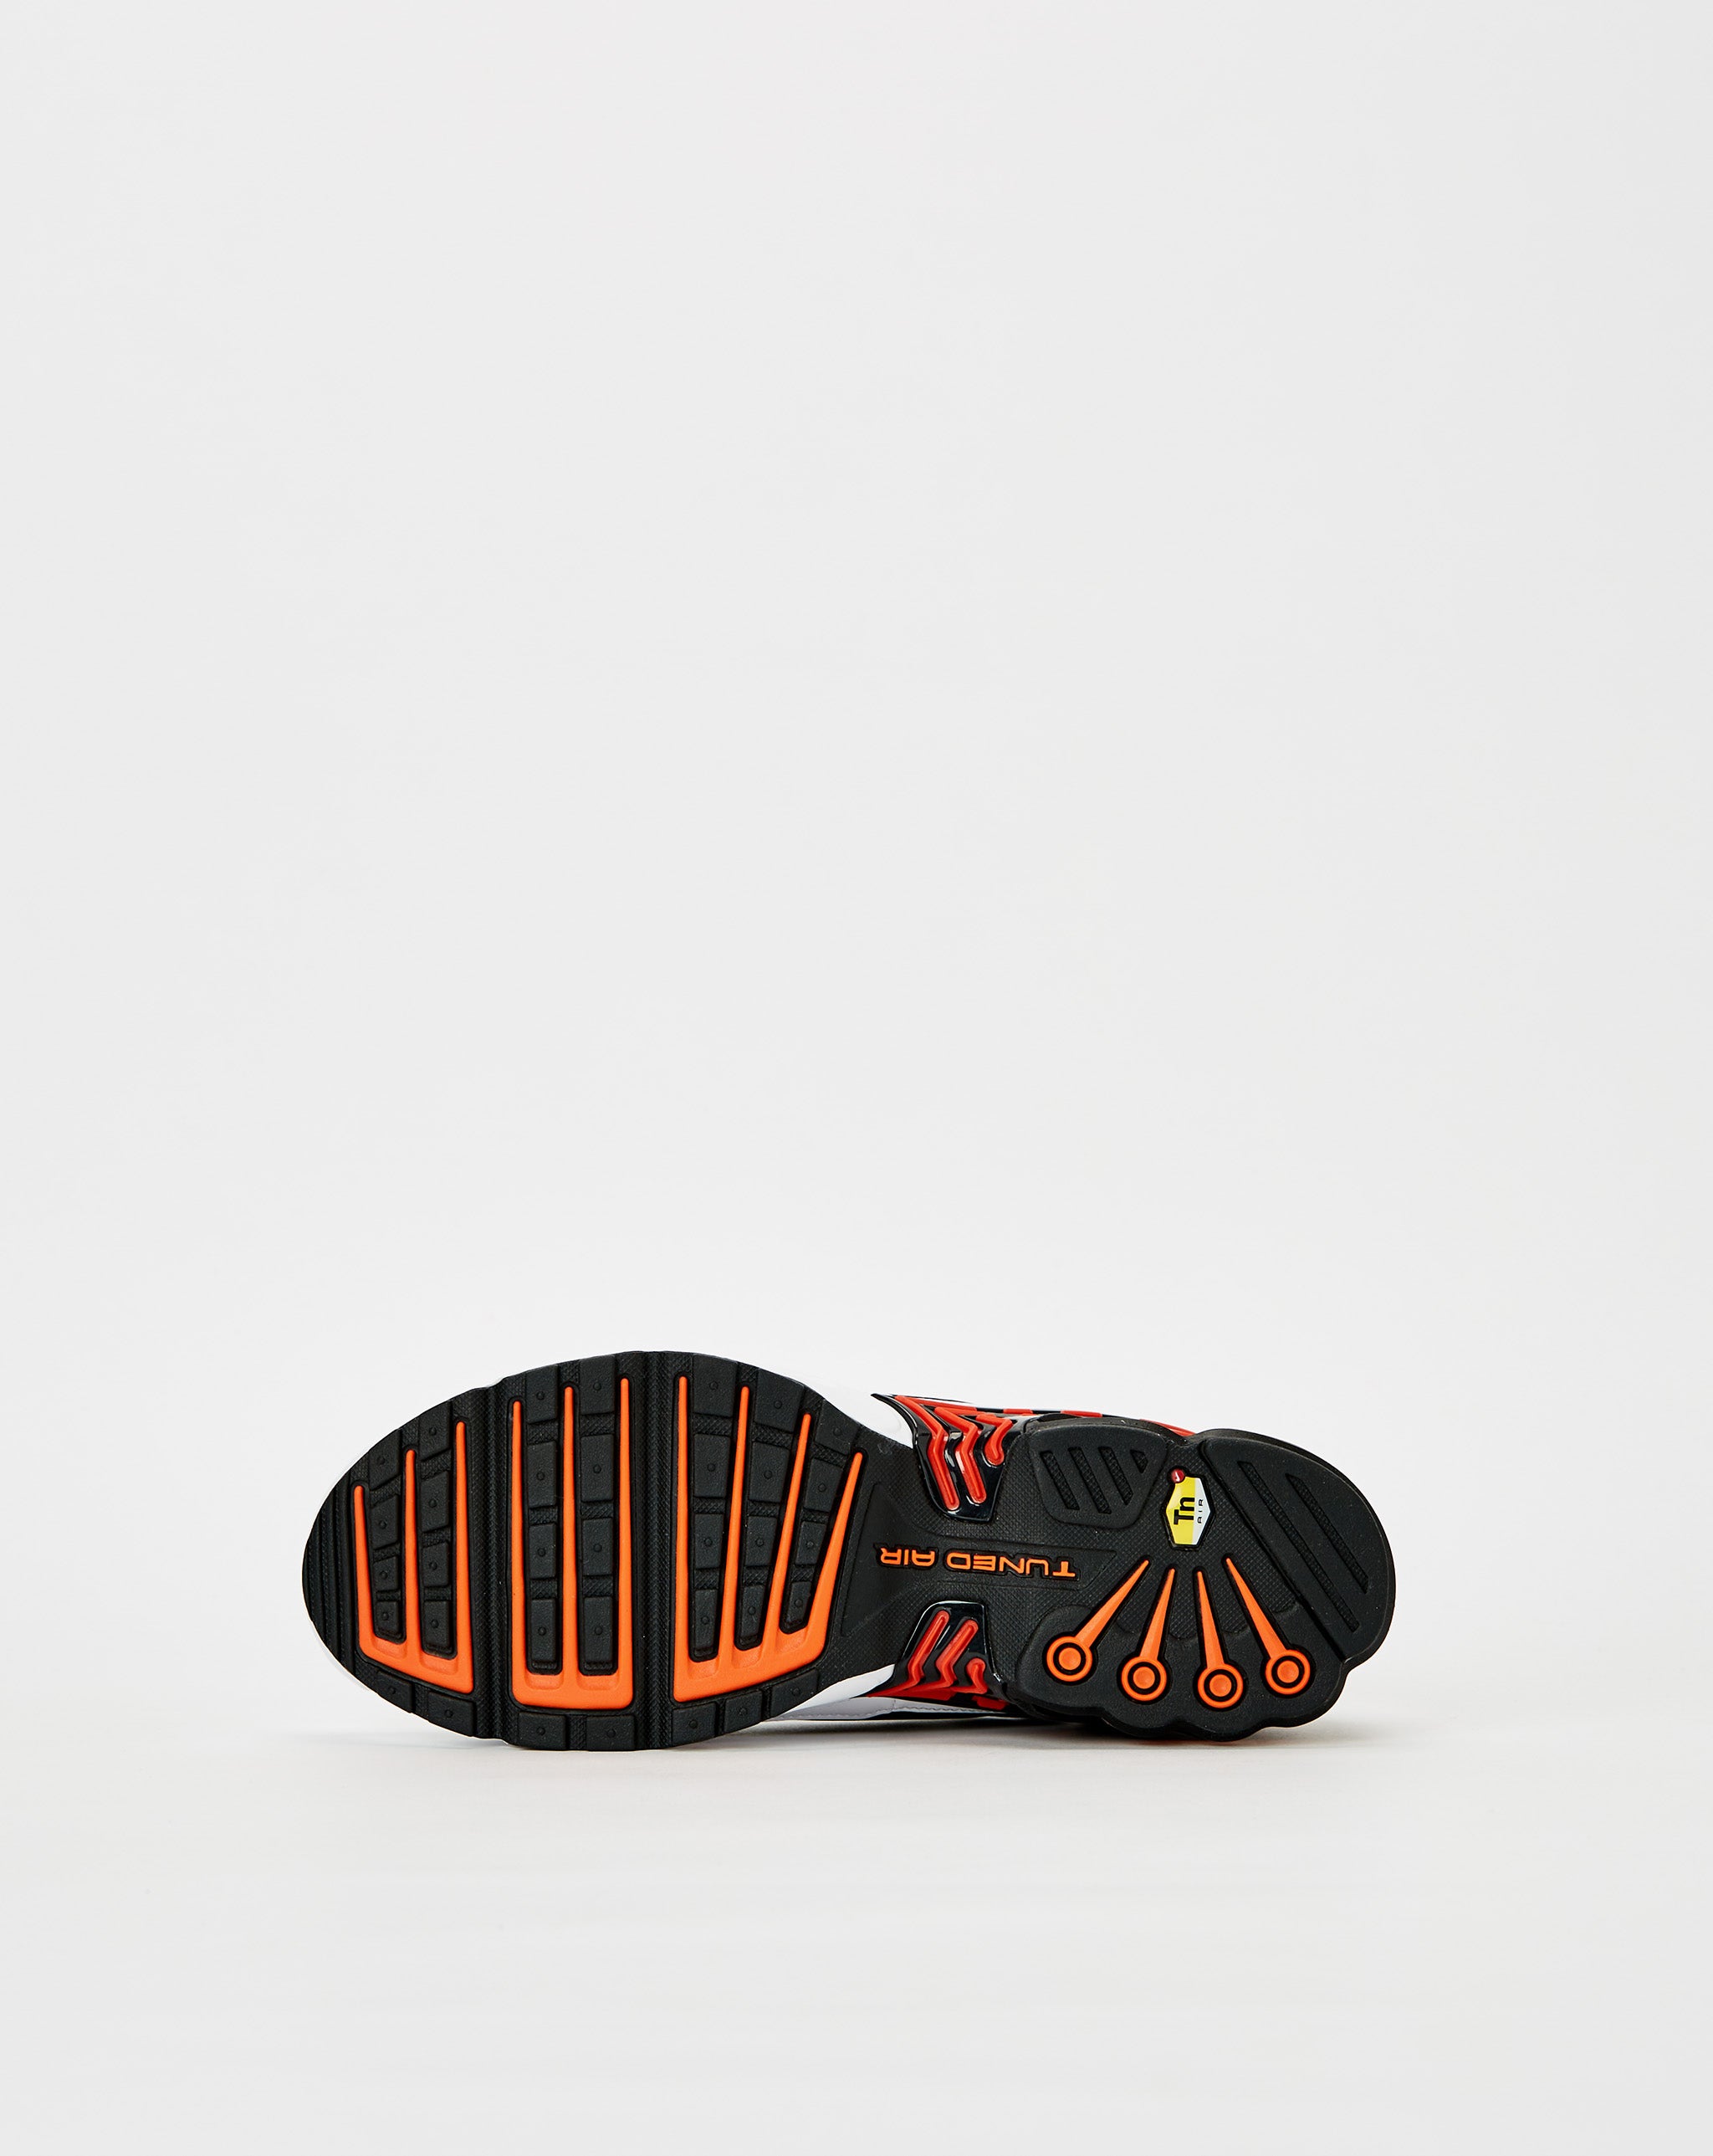 Nike nike shox turbo 2012 for sale craigslist ebay  - Cheap Urlfreeze Jordan outlet